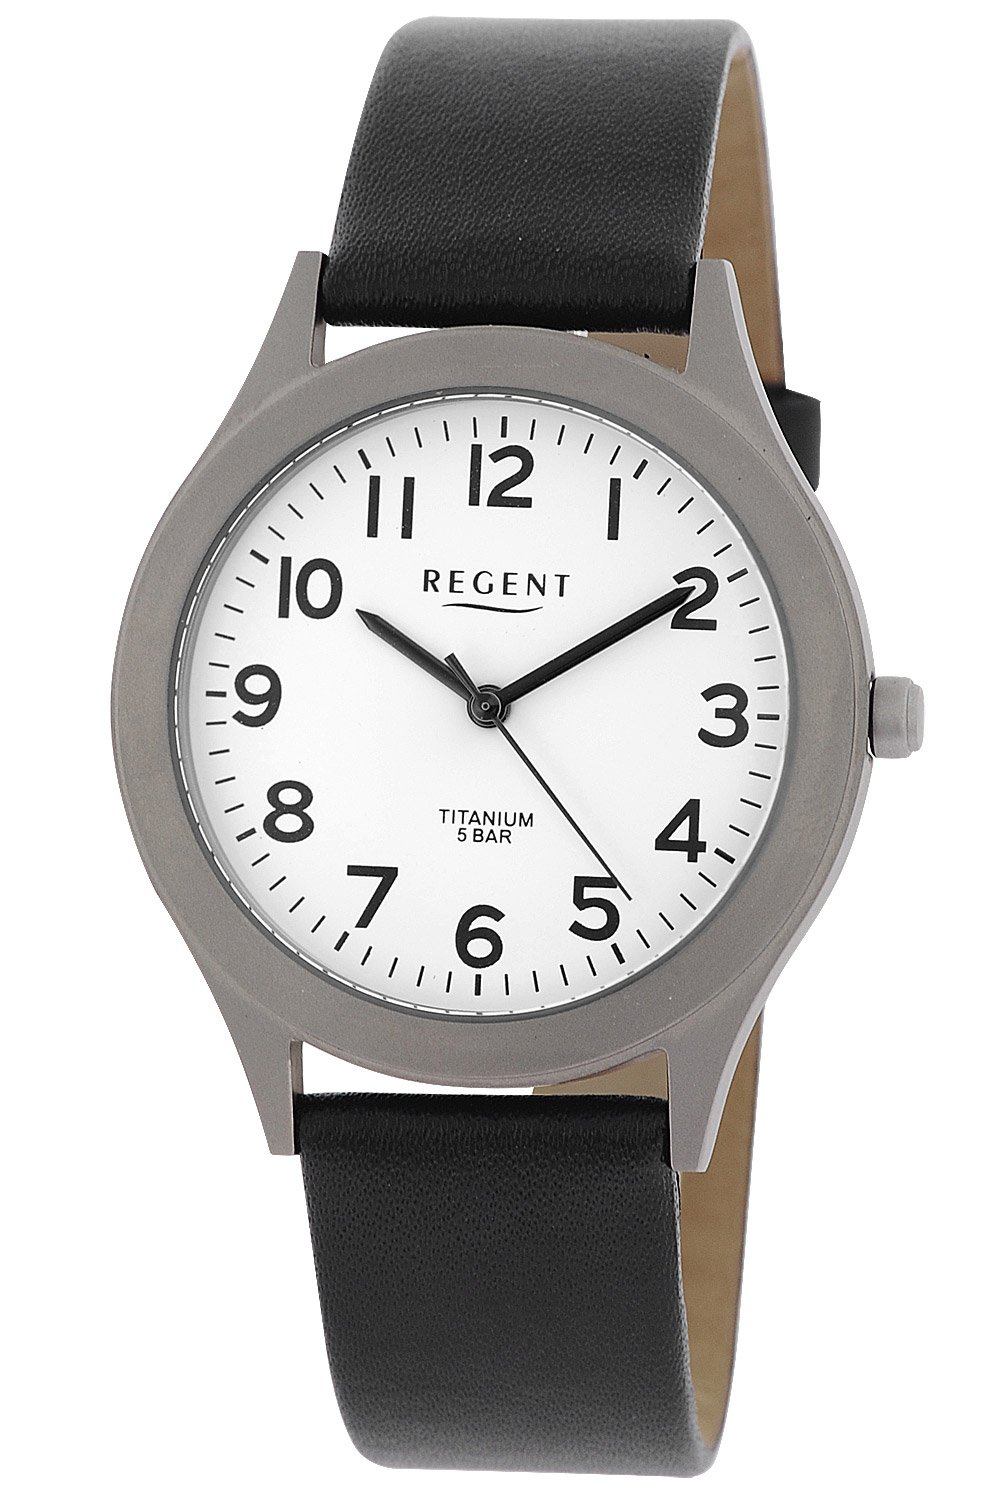 Regent Titanium Men's Watch with Leather Strap F-842 • uhrcenter